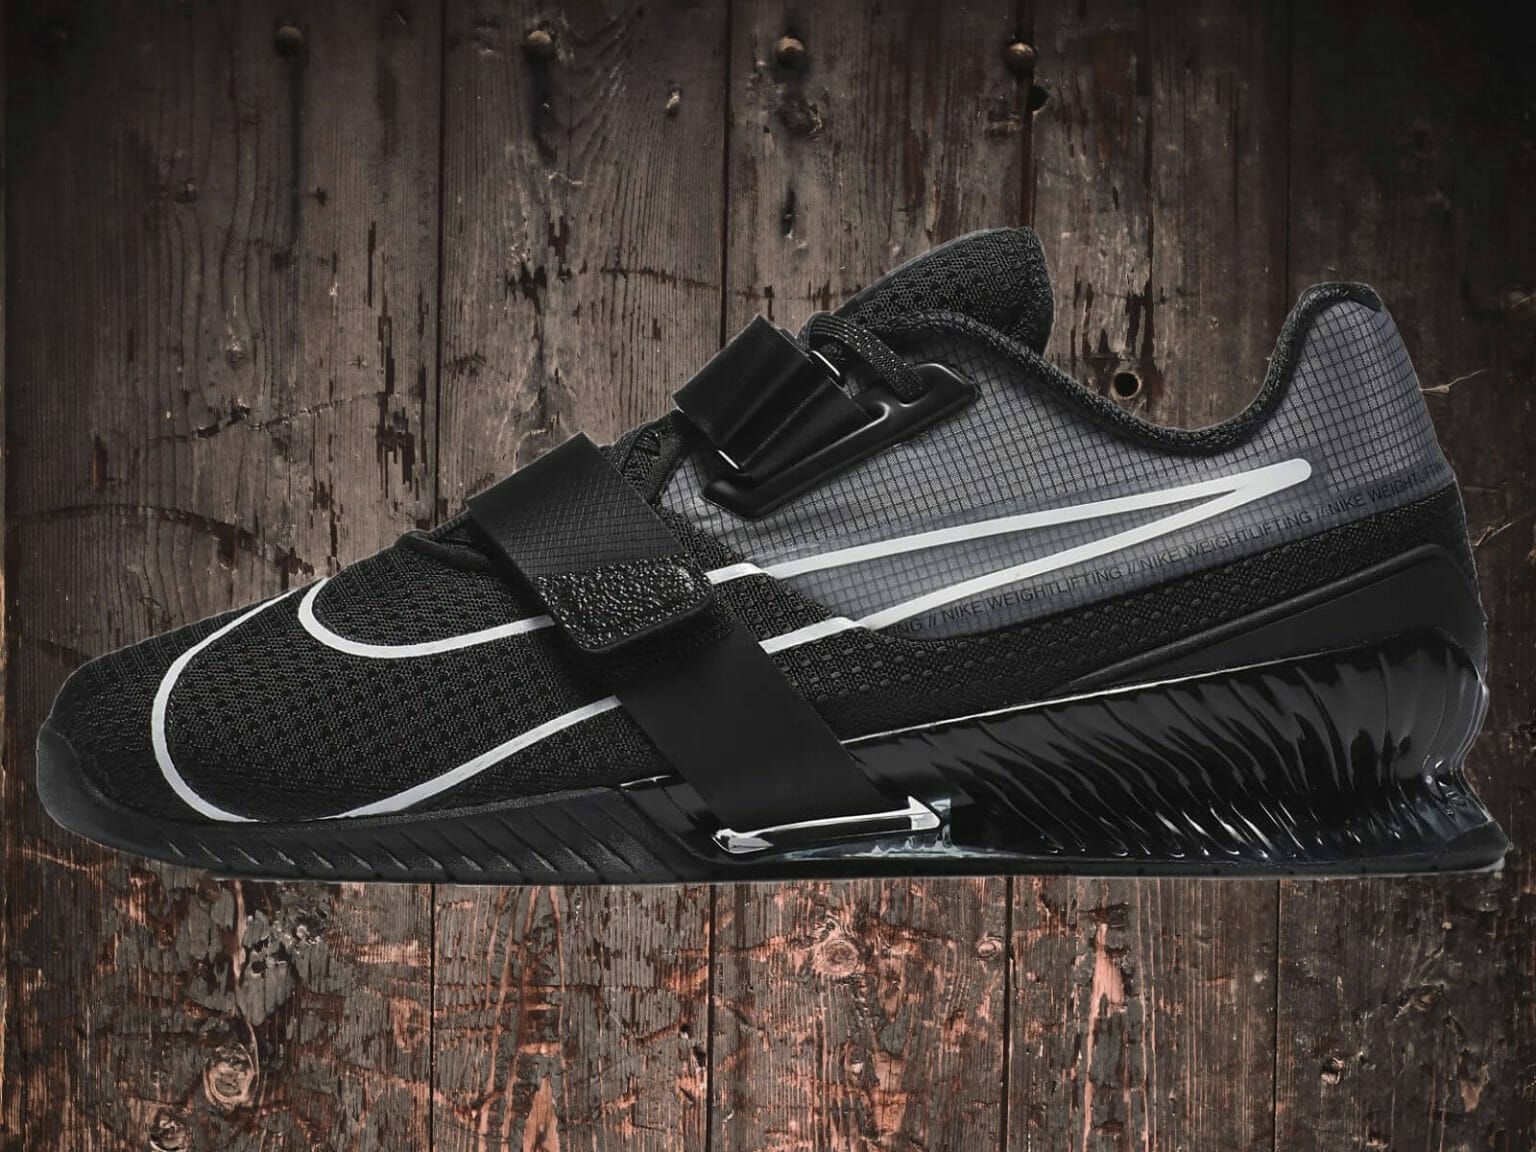 Nike Romaleos 4 All Black Colorway Profile 1536x1152 ?strip=all&lossy=1&ssl=1